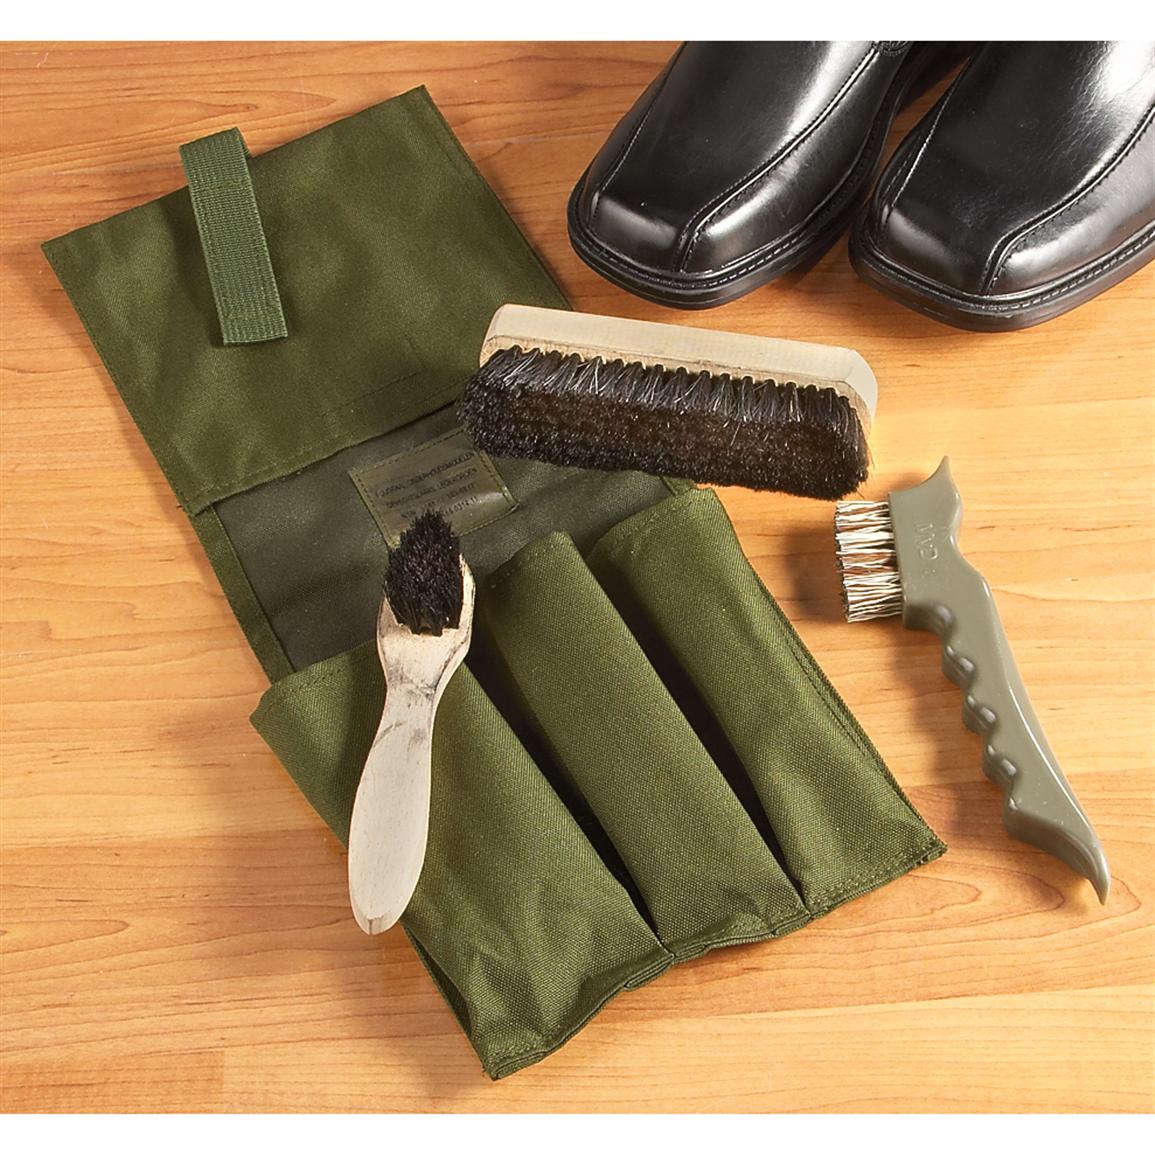 New Dutch Military Shoe Polish Kit 